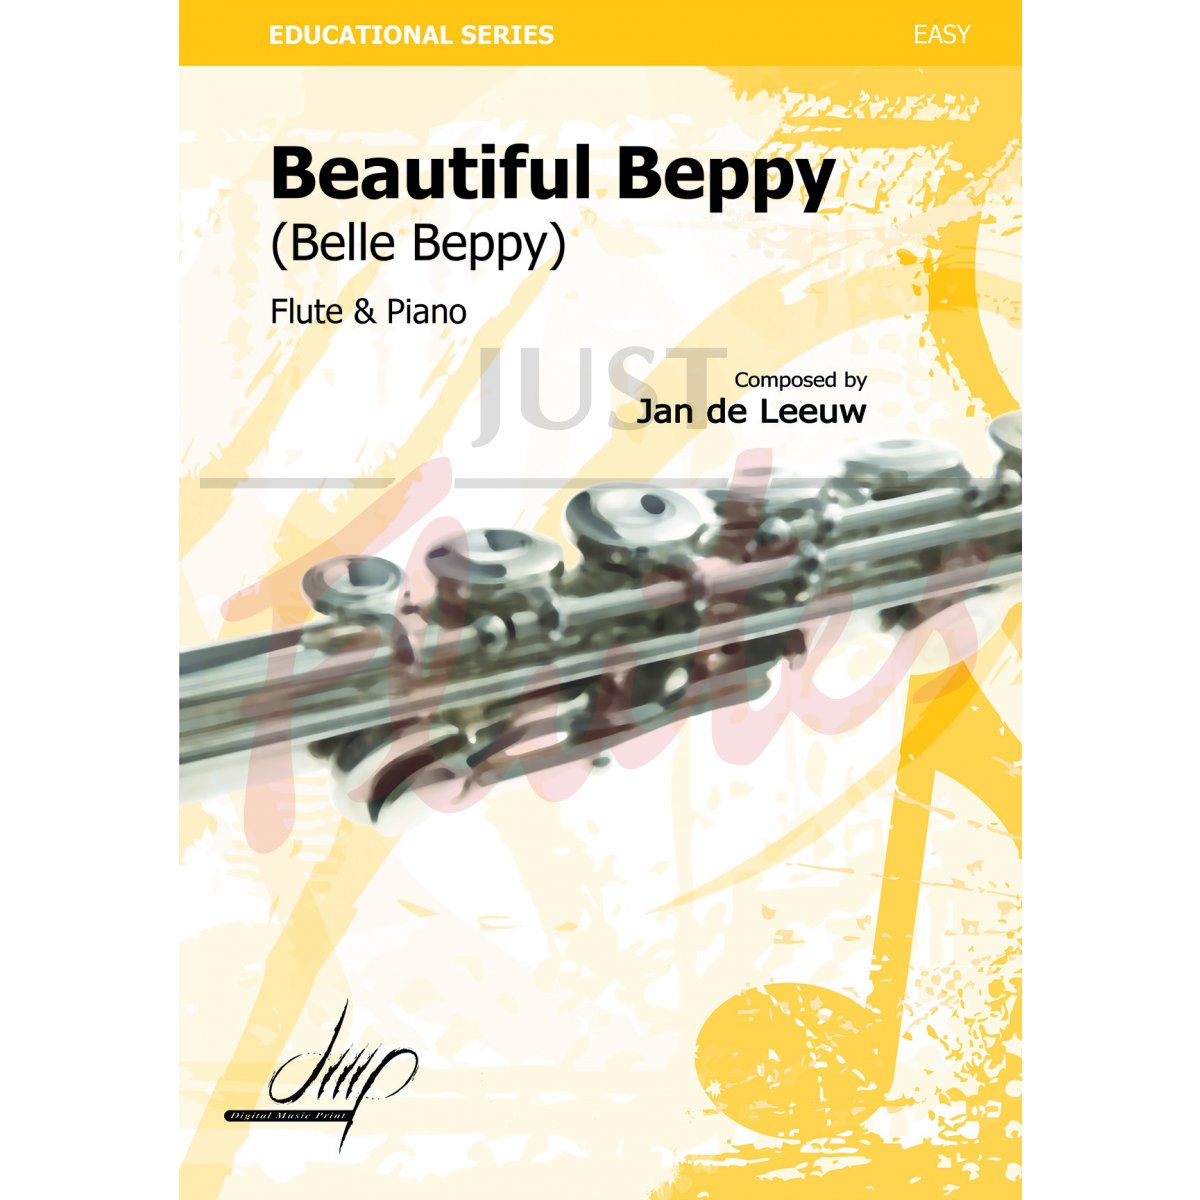 Belle Beppy